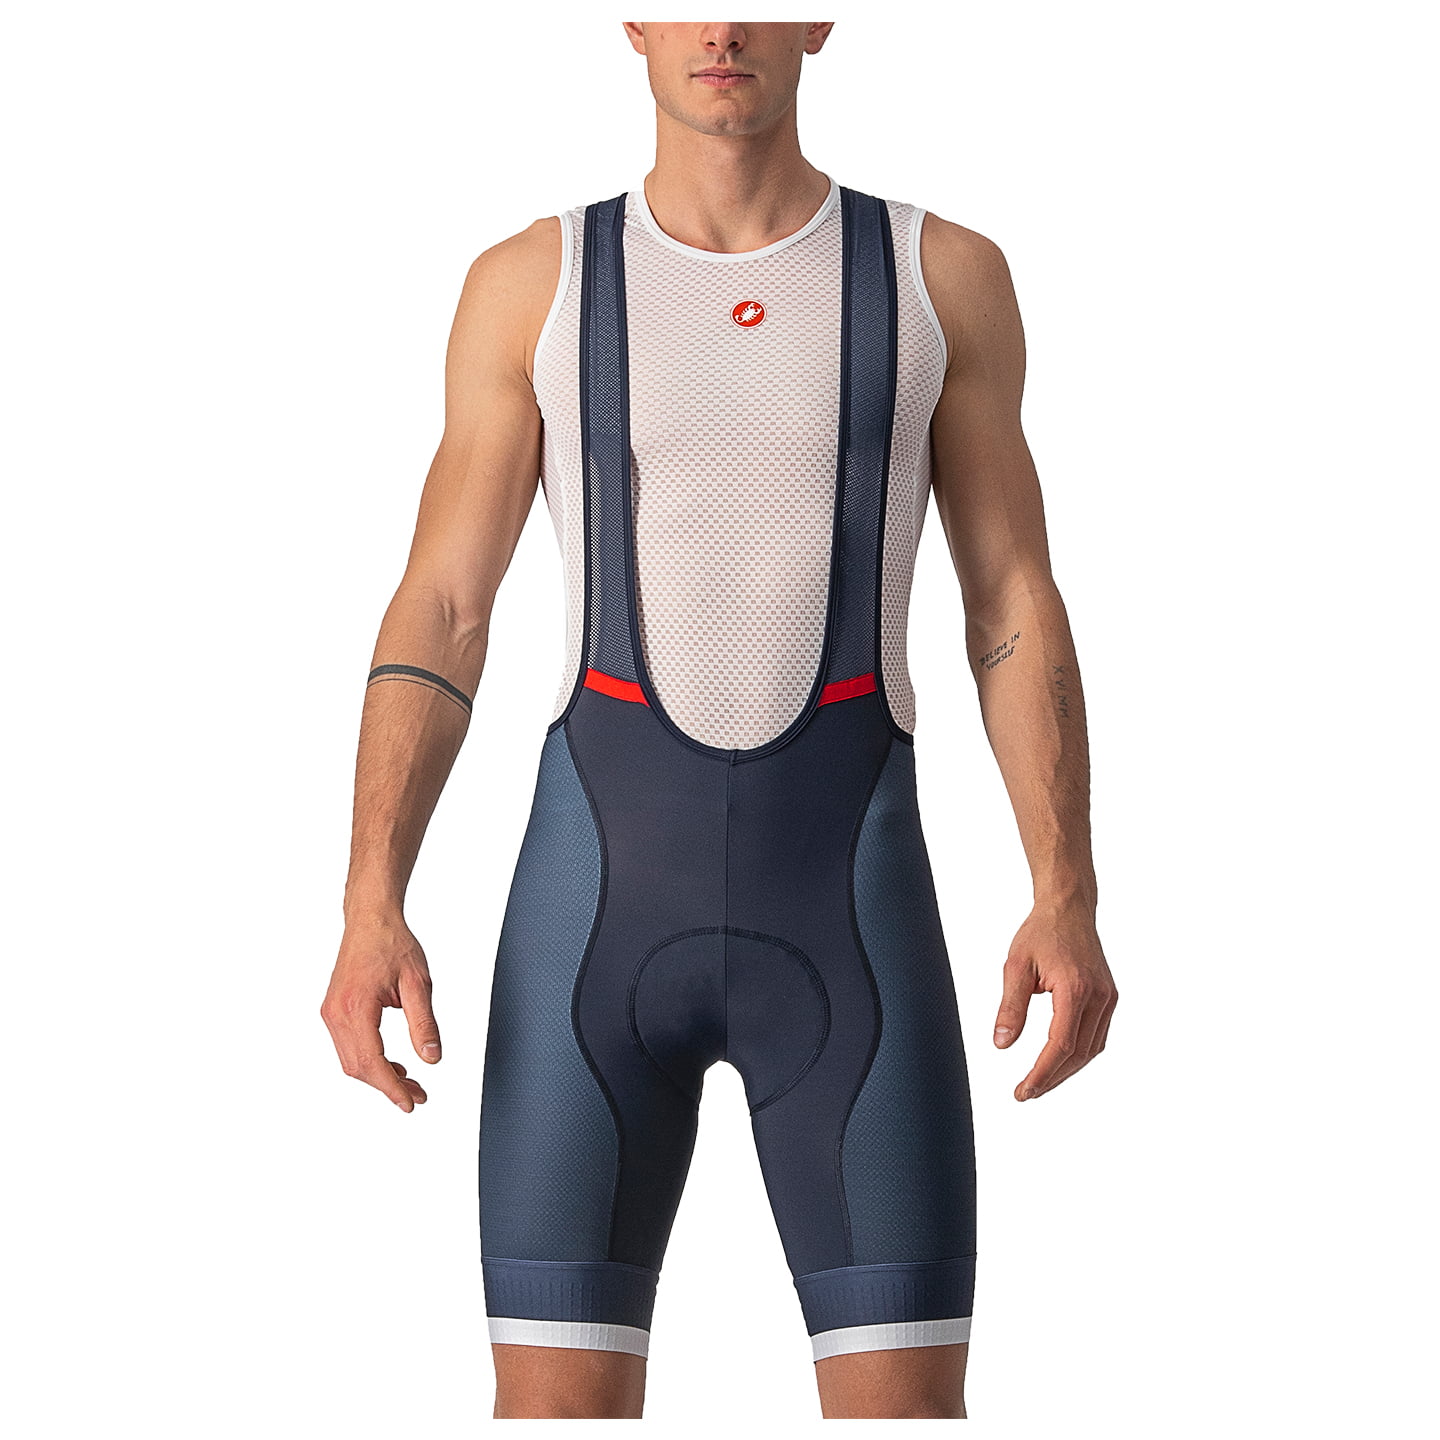 Competizione Kit Bib Shorts Bib Shorts, for men, size M, Cycle shorts, Cycling clothing